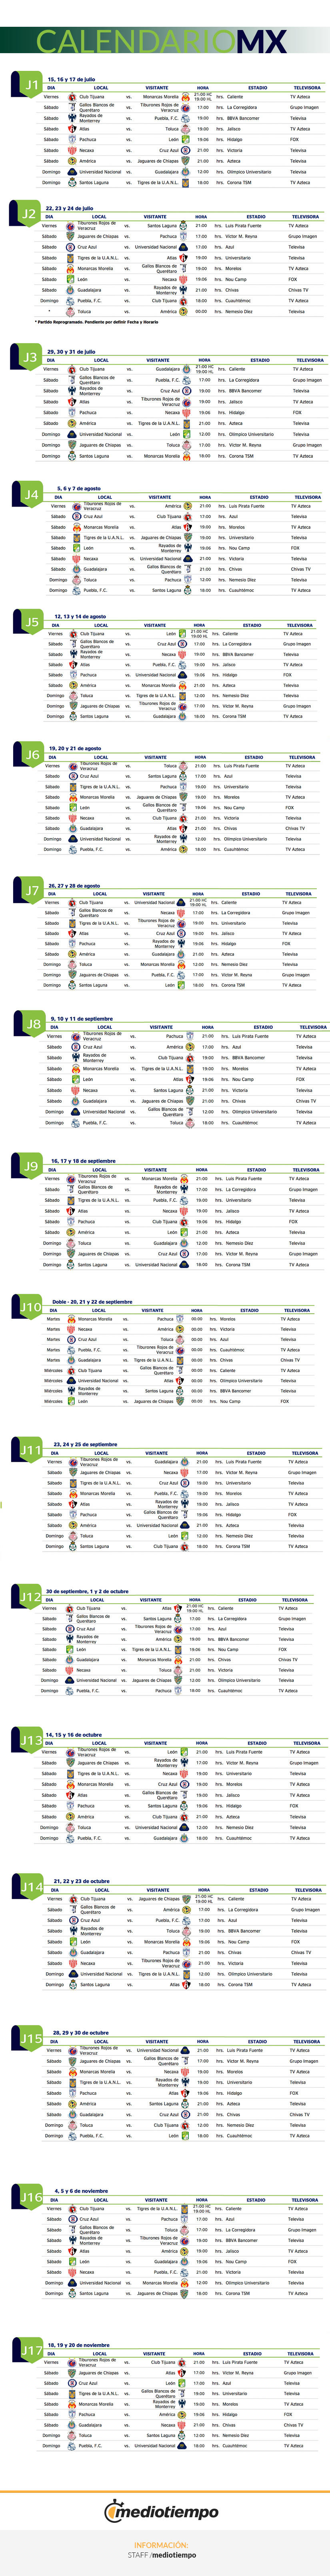 Calendario del futbol mexicano Apertura 2016